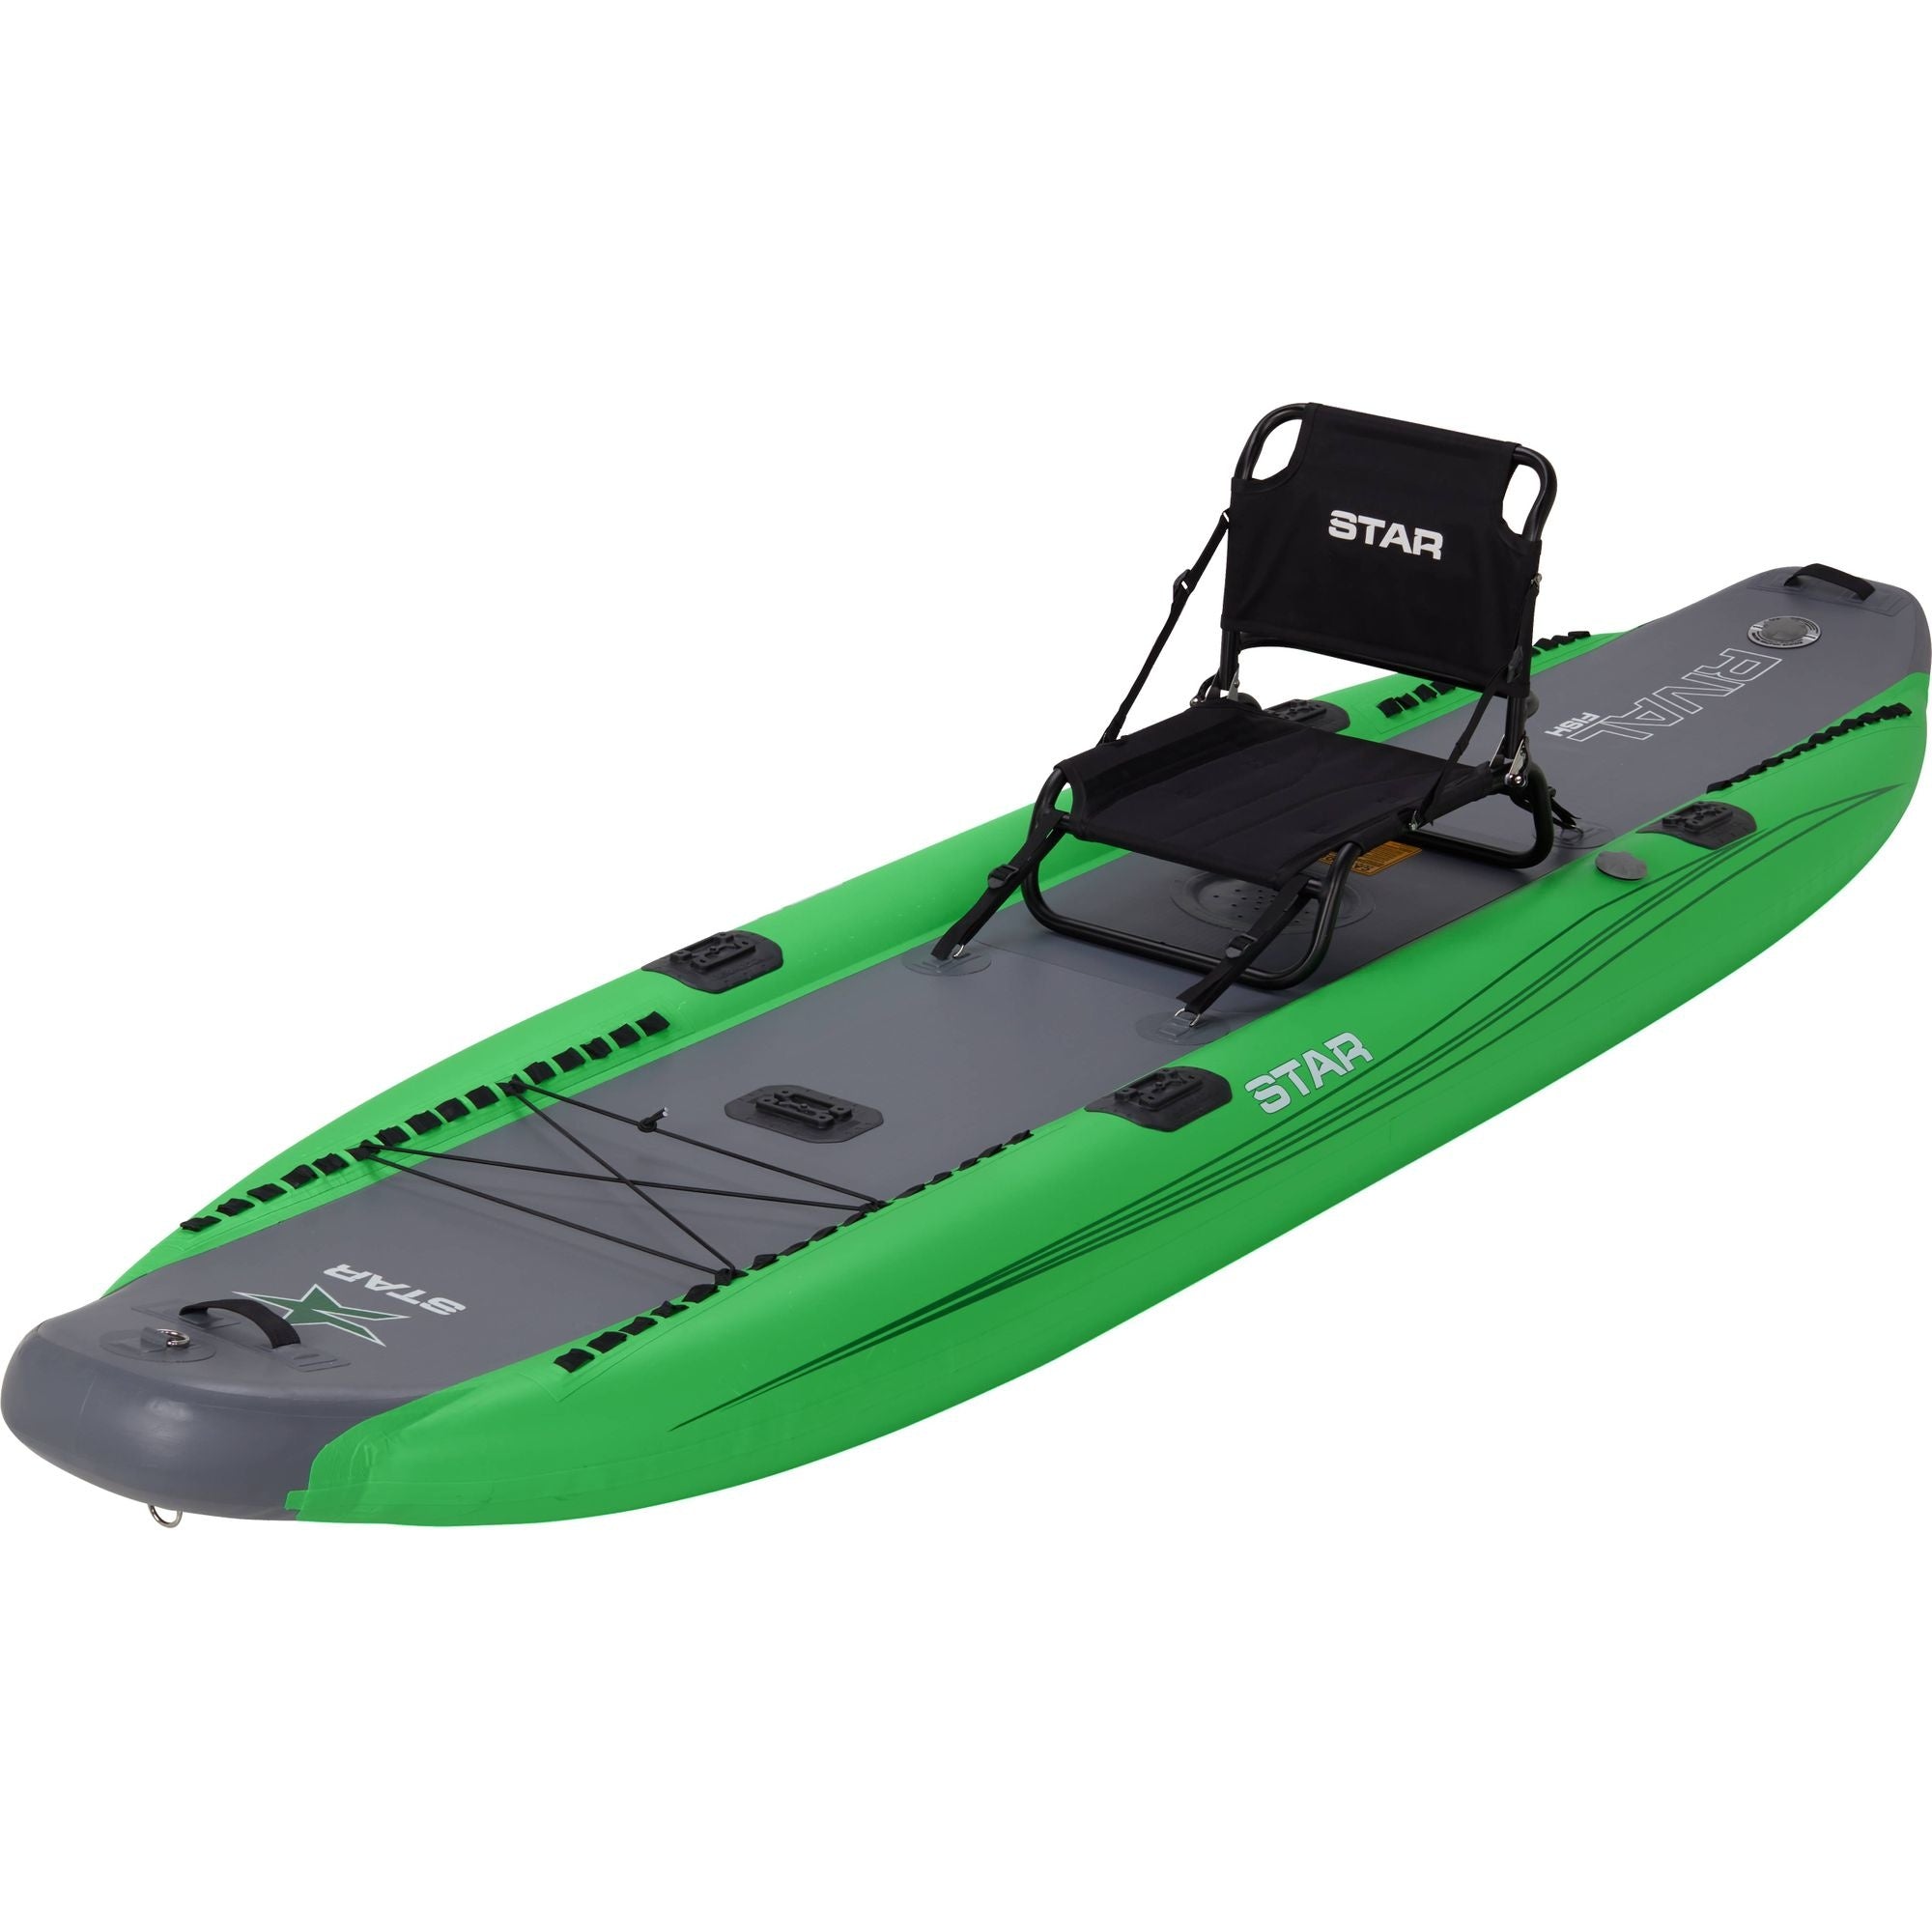 STAR - Rival Inflatable Fishing Kayak